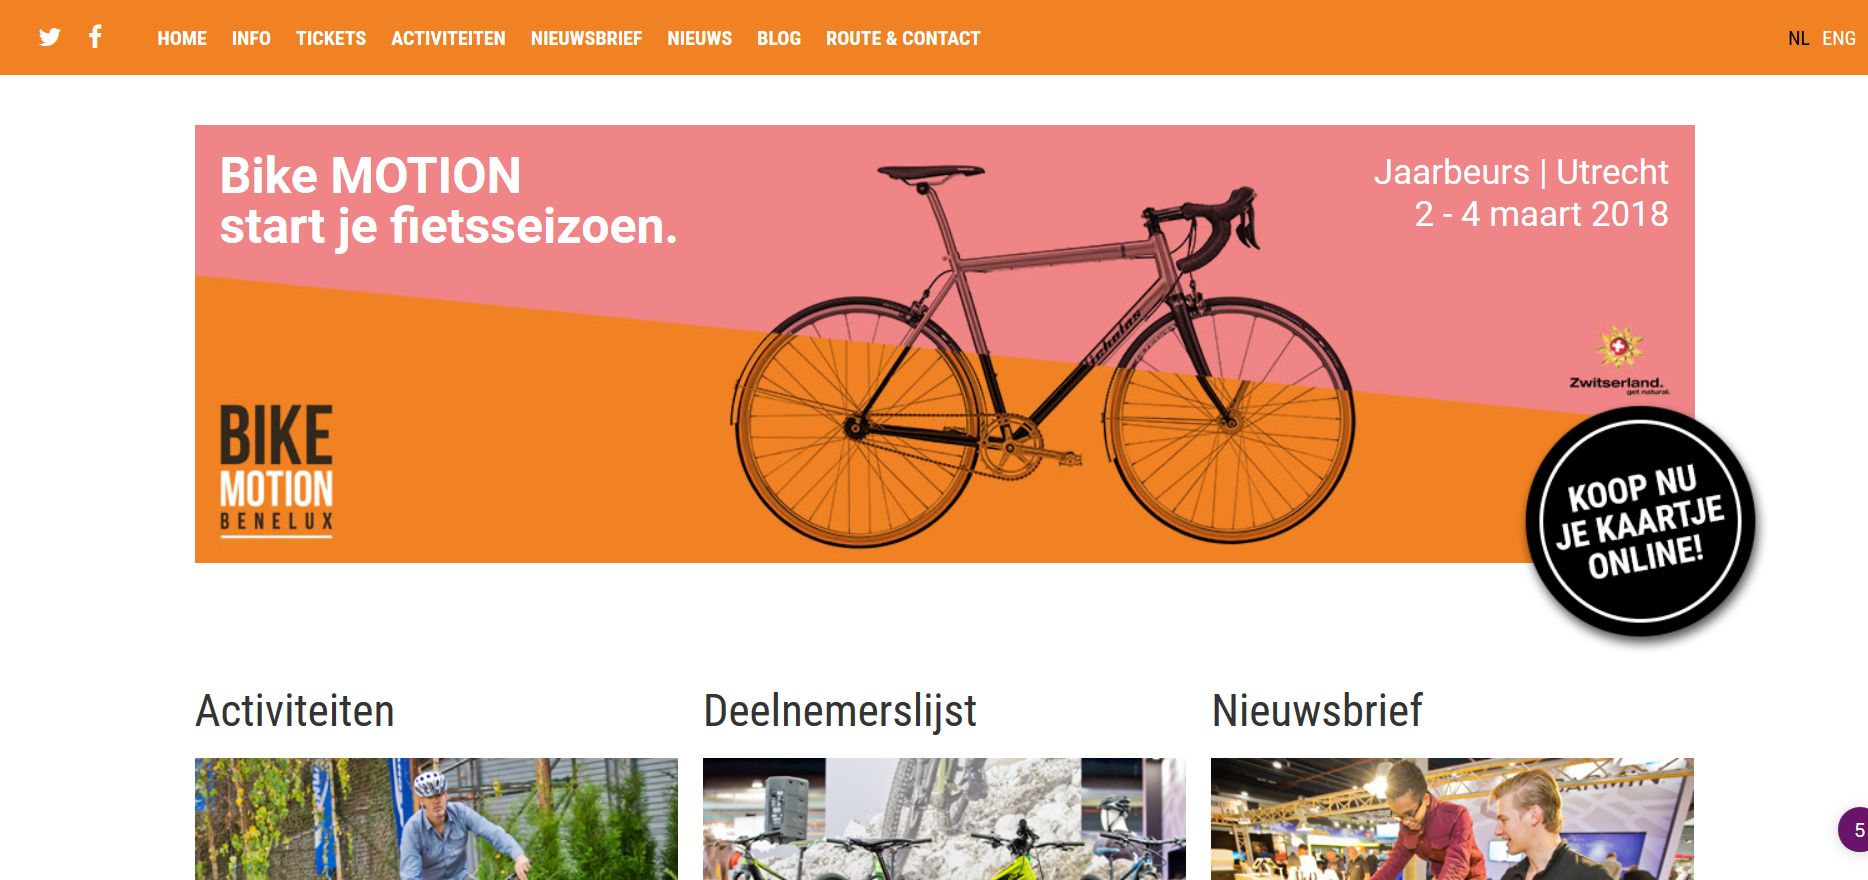 Niederlande: Bike Motion Benelux 2018 